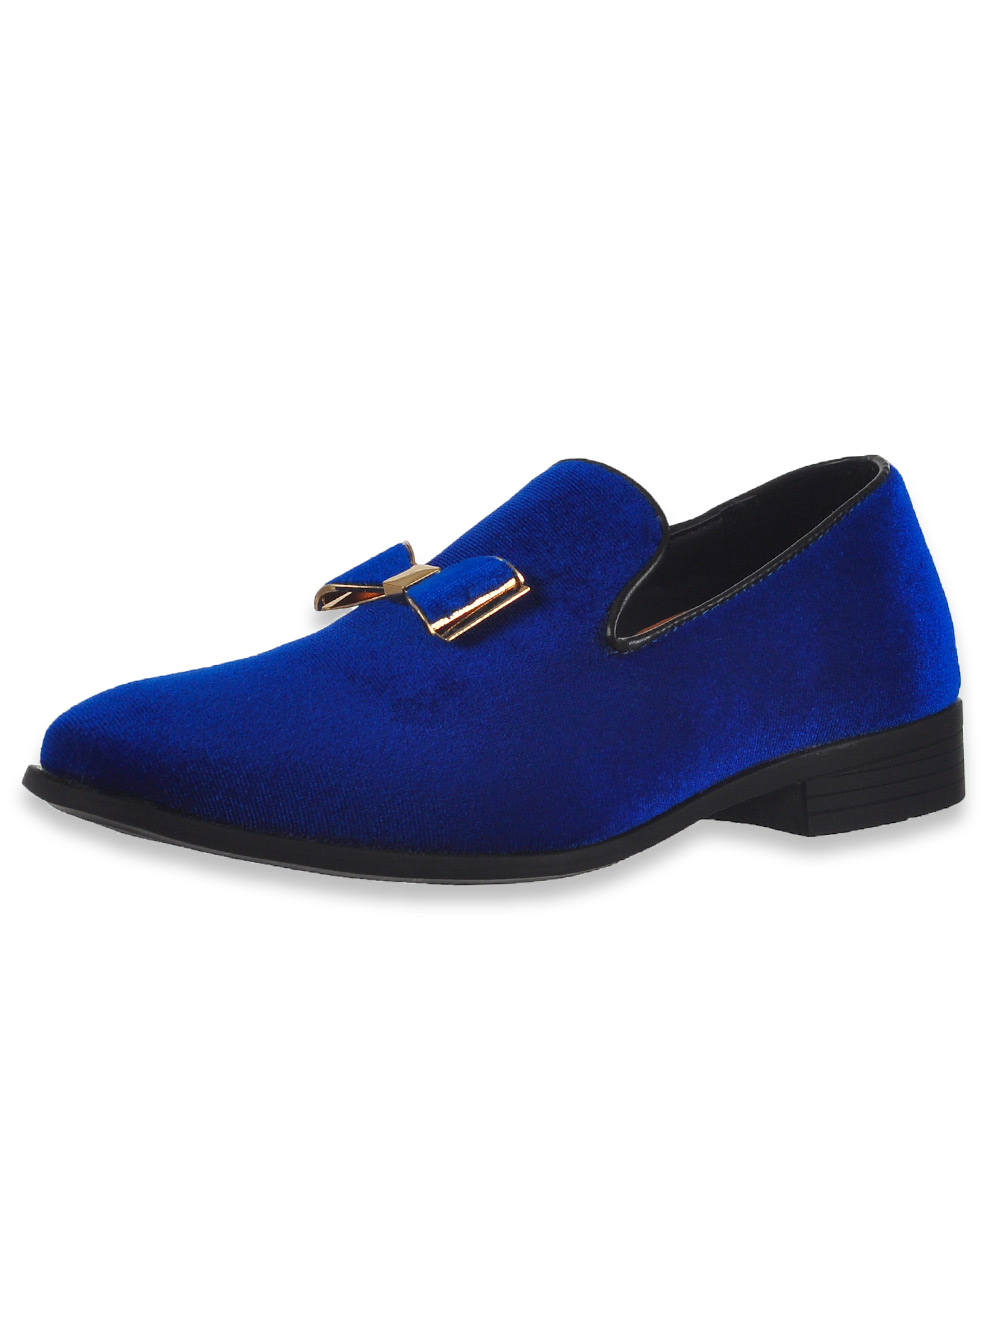 blue dress shoes for boys